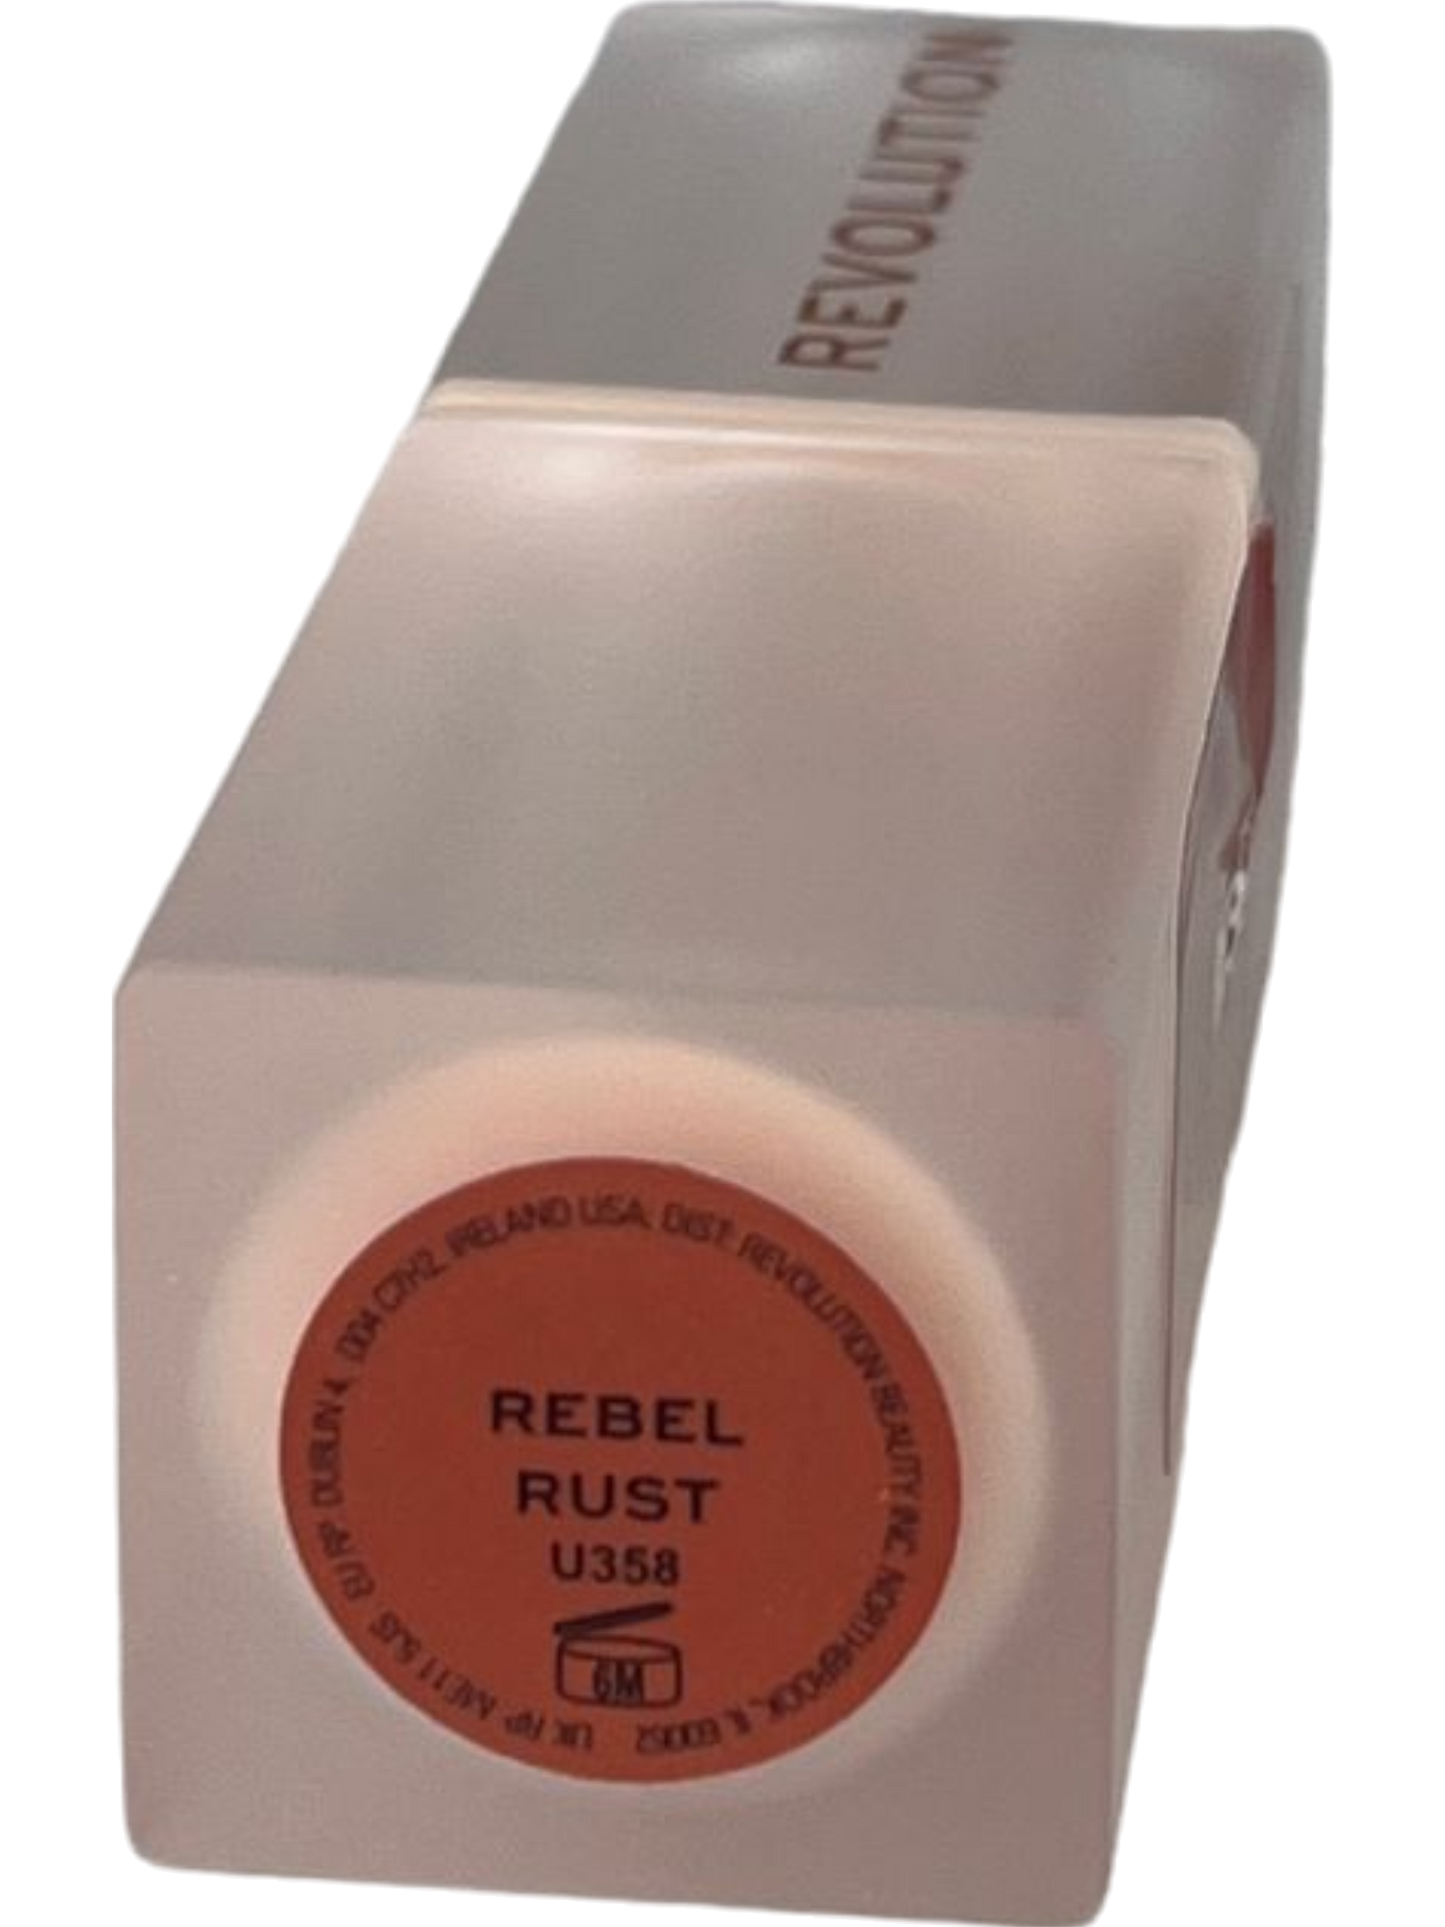 Revolution Neutral Lip Allure Soft Satin Lipstick Rebel Rust